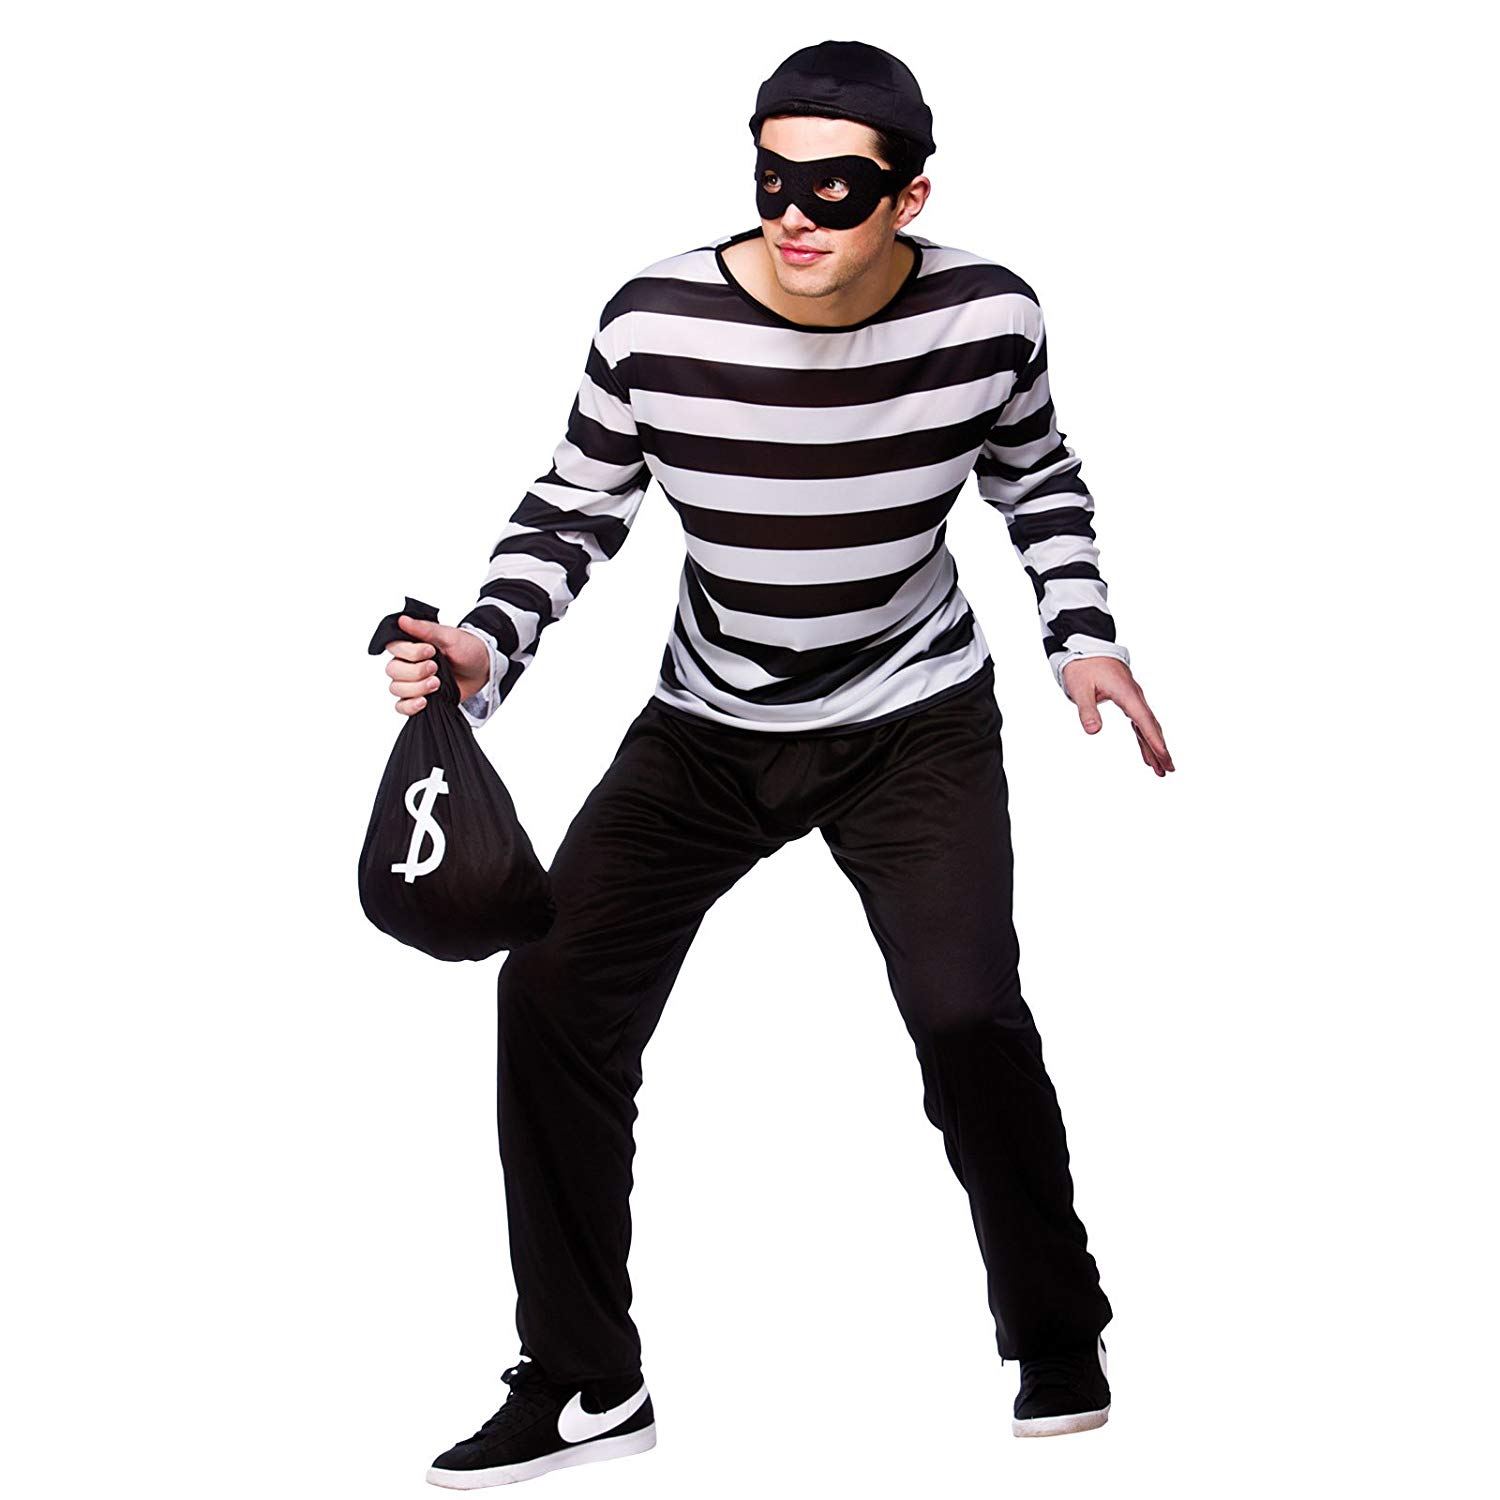 Burglar robber image